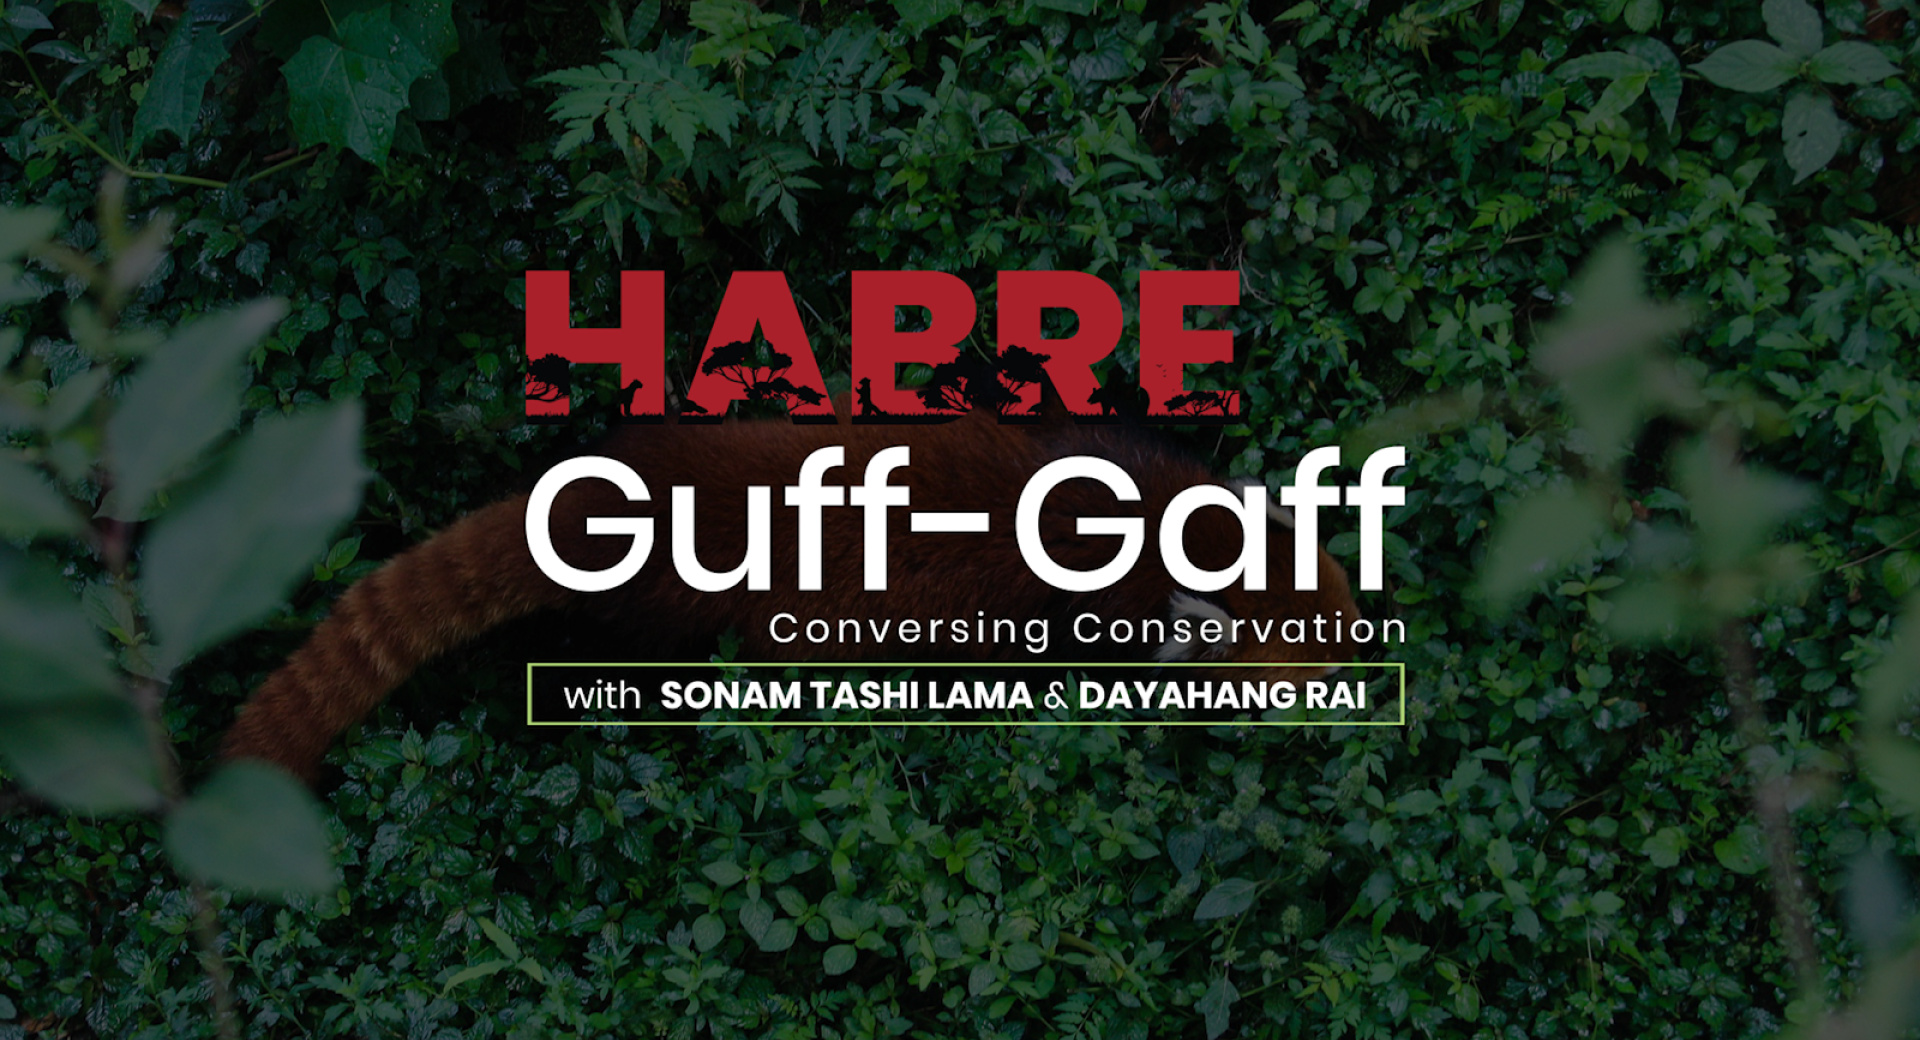 Habre Guff-Gaff: Conversing Red Panda Conservation